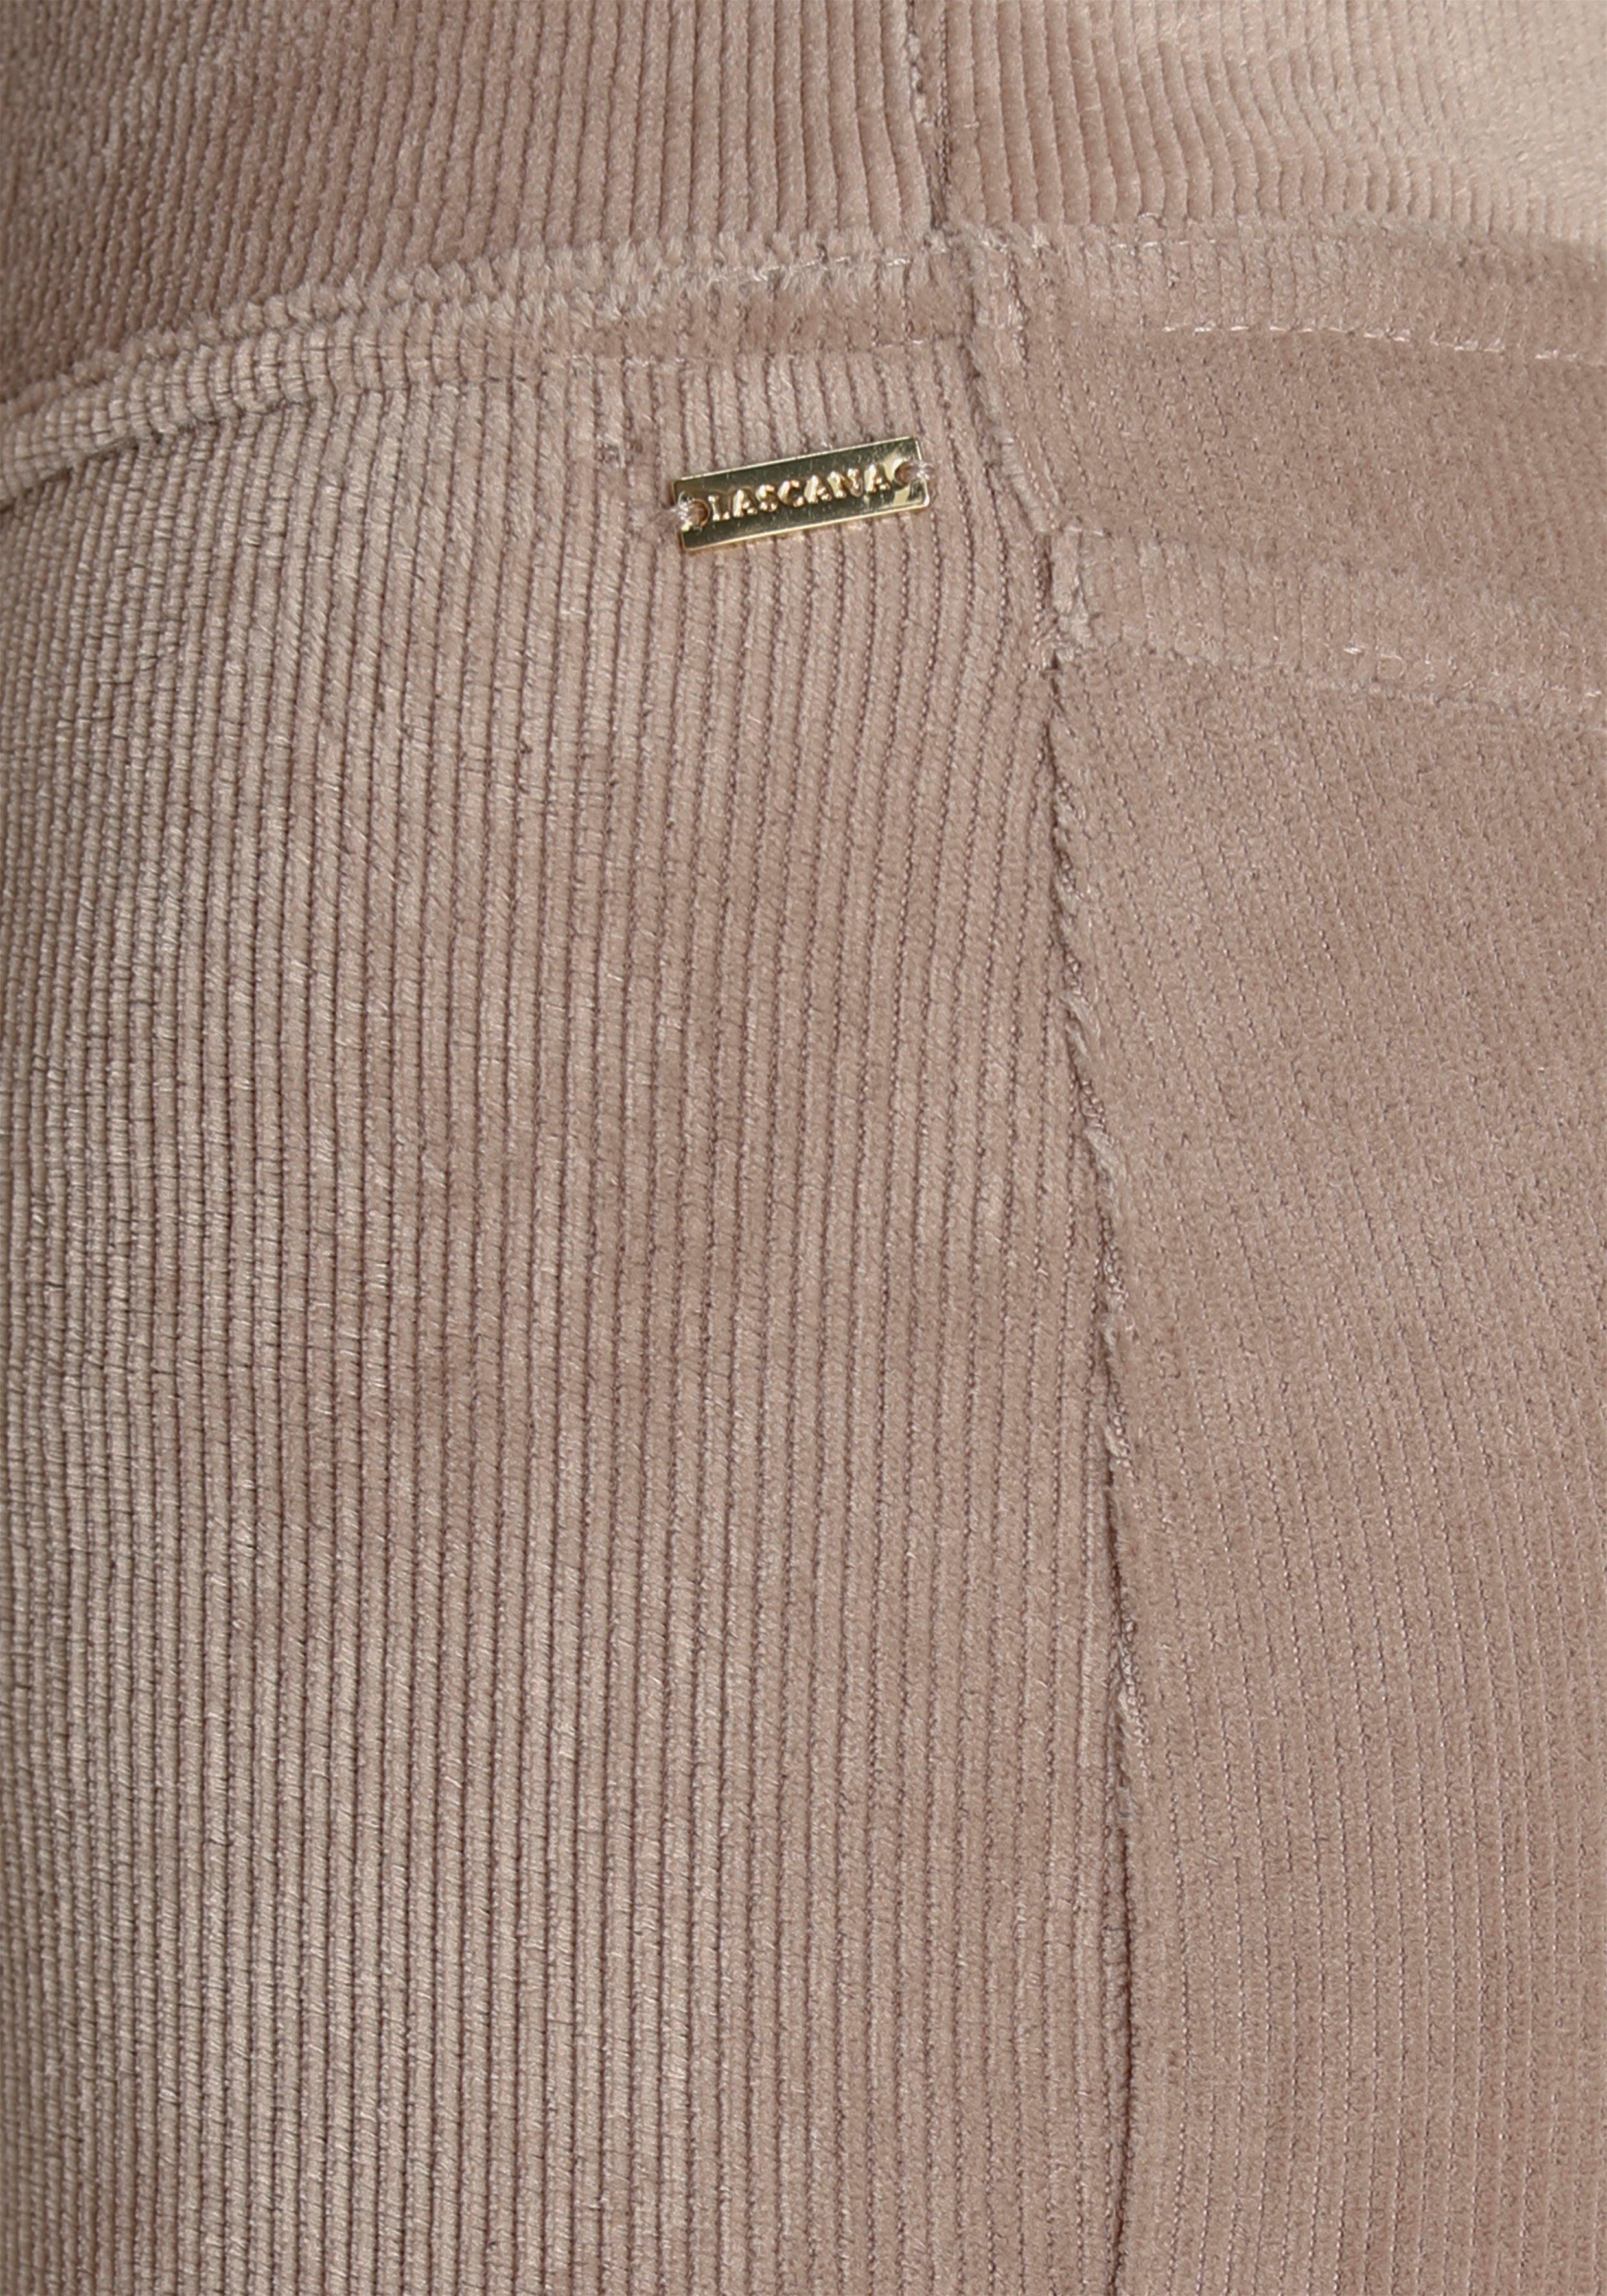 Leggings aus weichem beige Loungewear Cord-Optik, LASCANA in Material